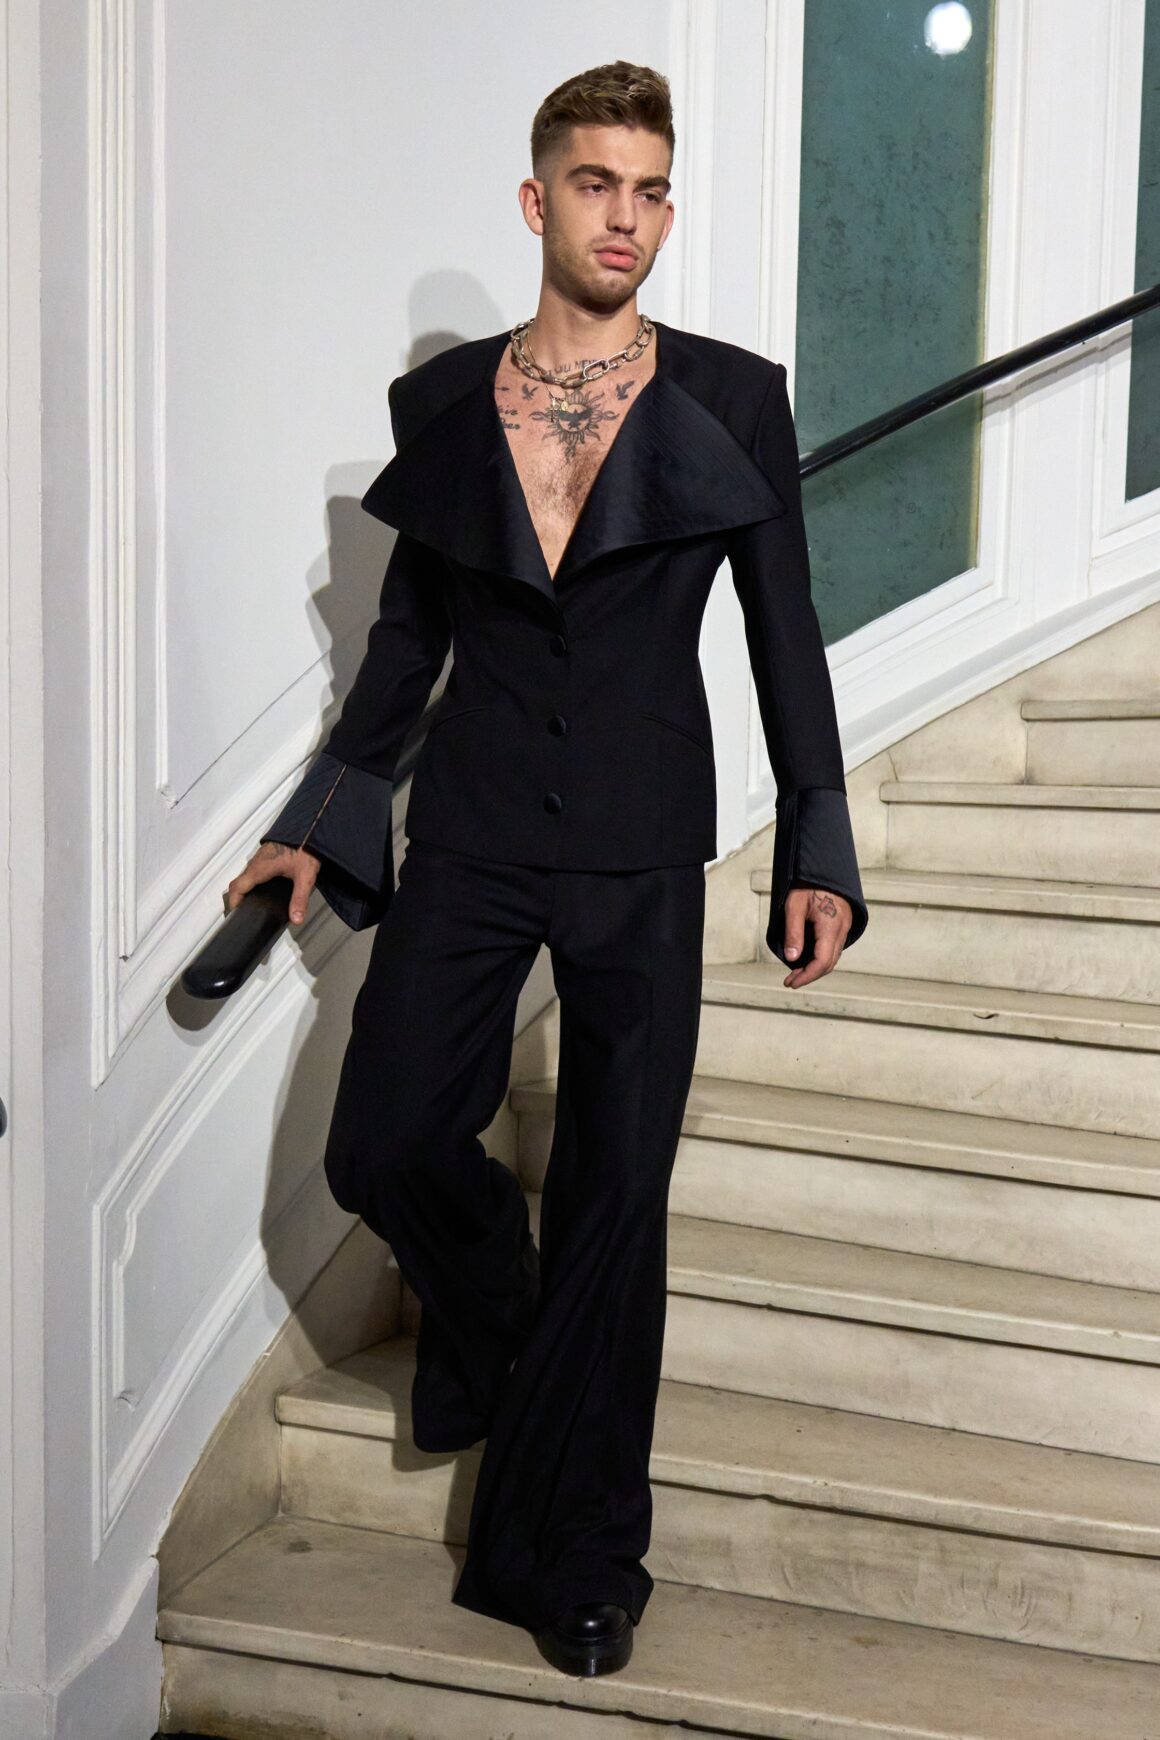 Christian Siriano Showcases Old Hollywood Glamour at New York Fashion Week Spring Summer 20232